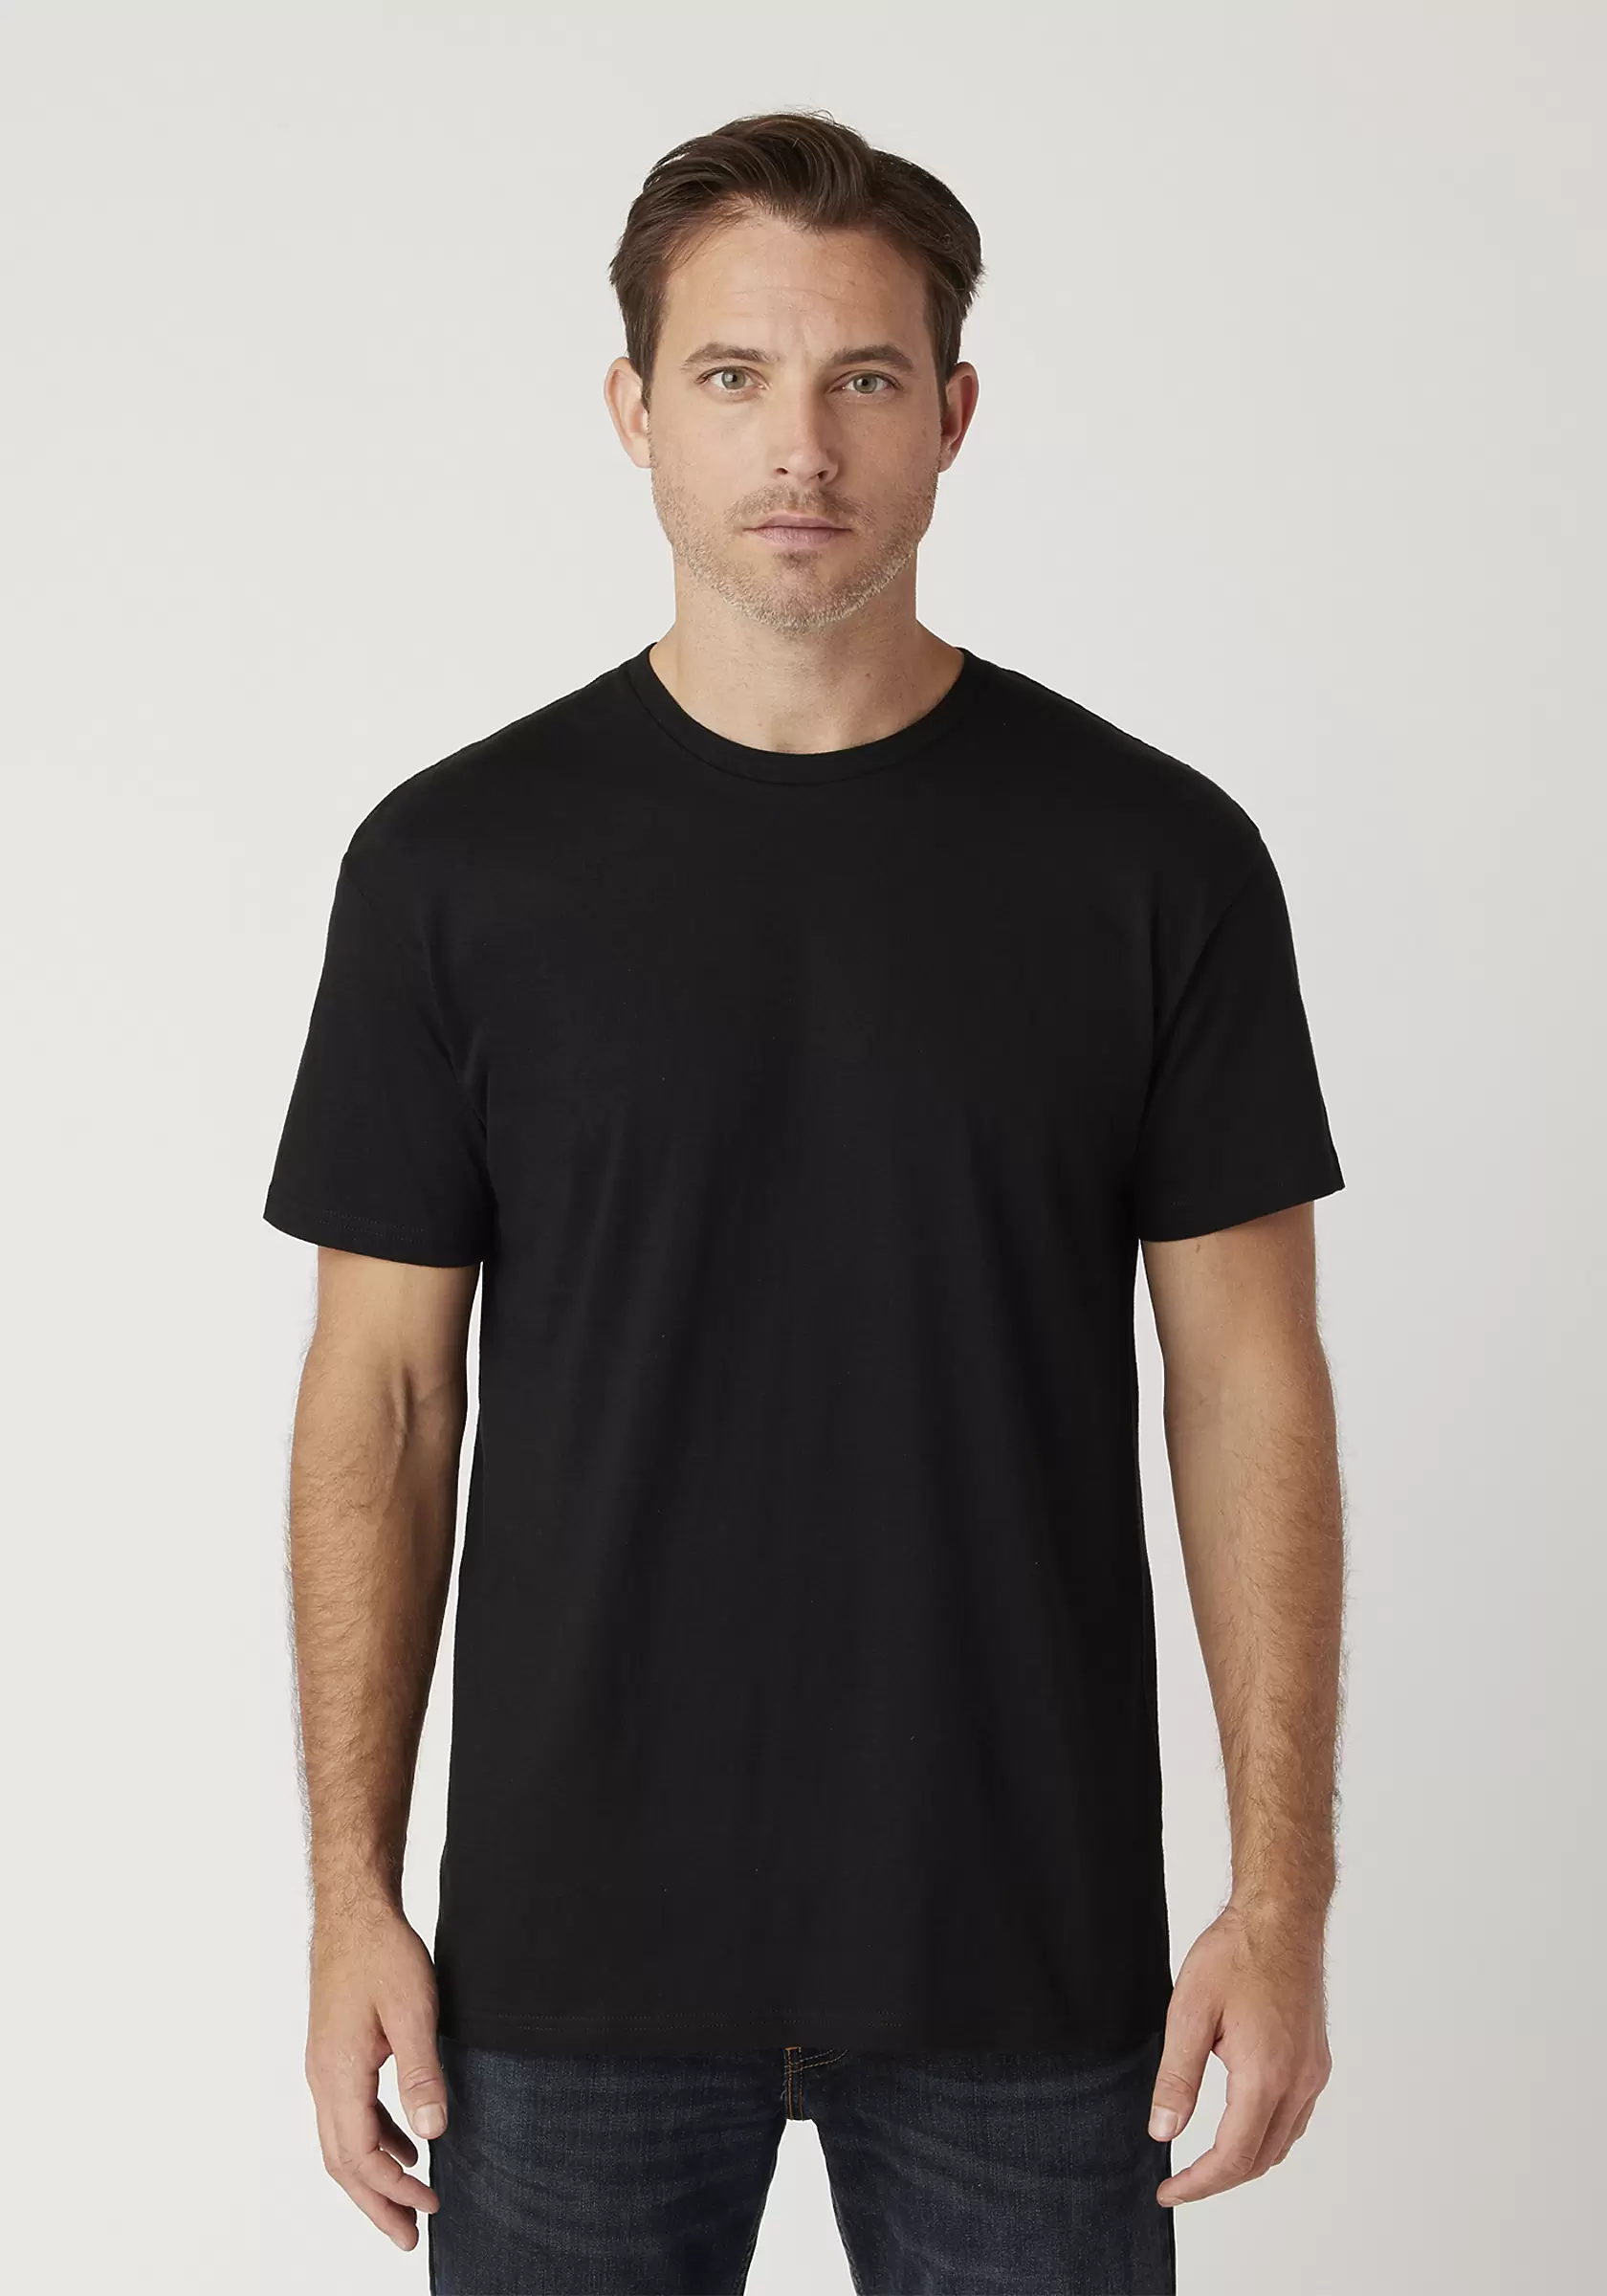 M1045 Crew Neck Men's Jersey T-Shirt Black - From $3.96